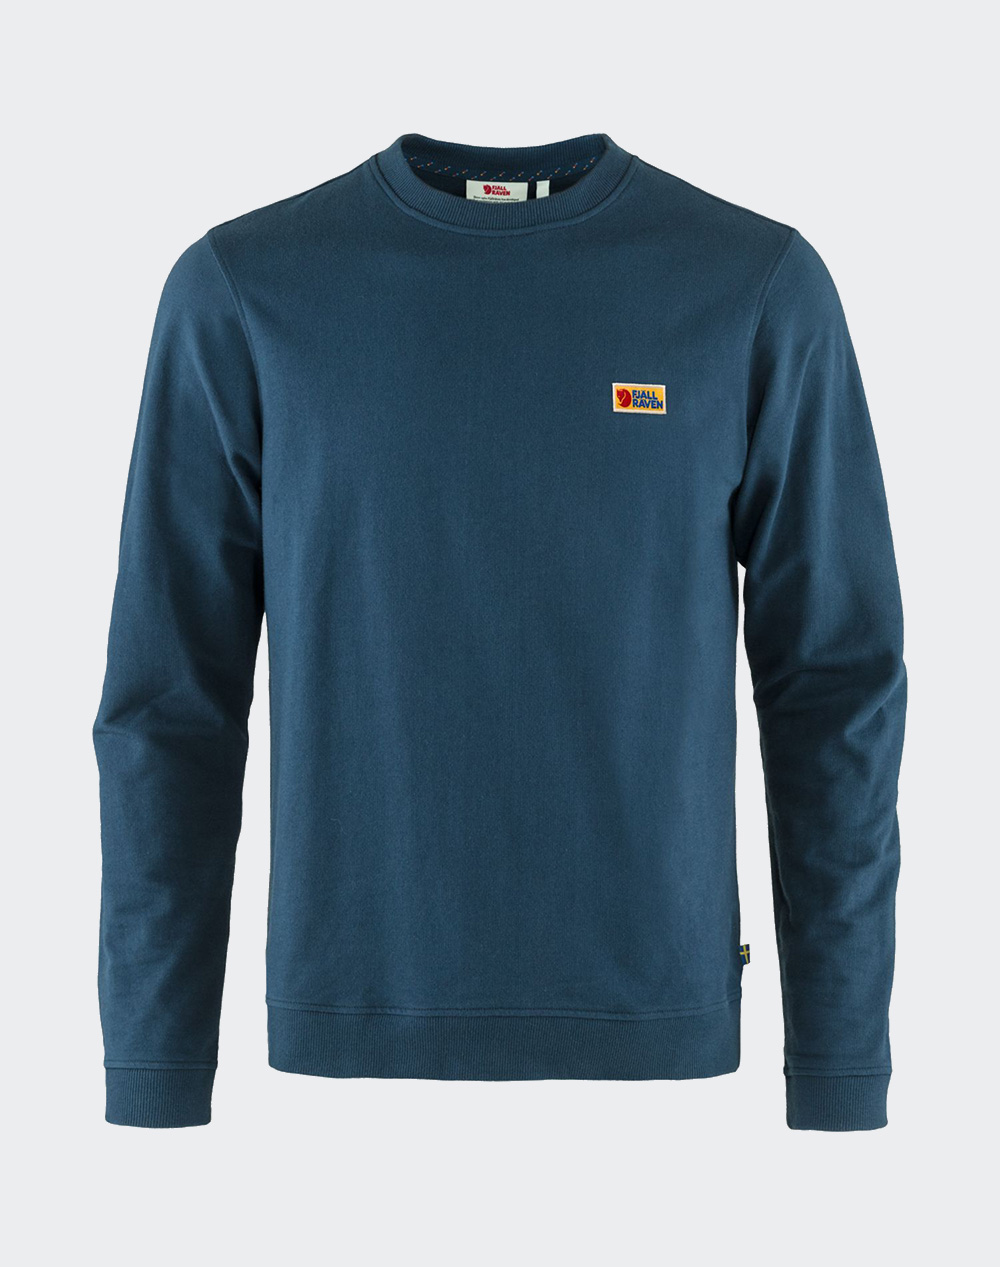 FJALLRAVEN Vardag Sweater M / Vardag Sweater M F87070-638 Blue